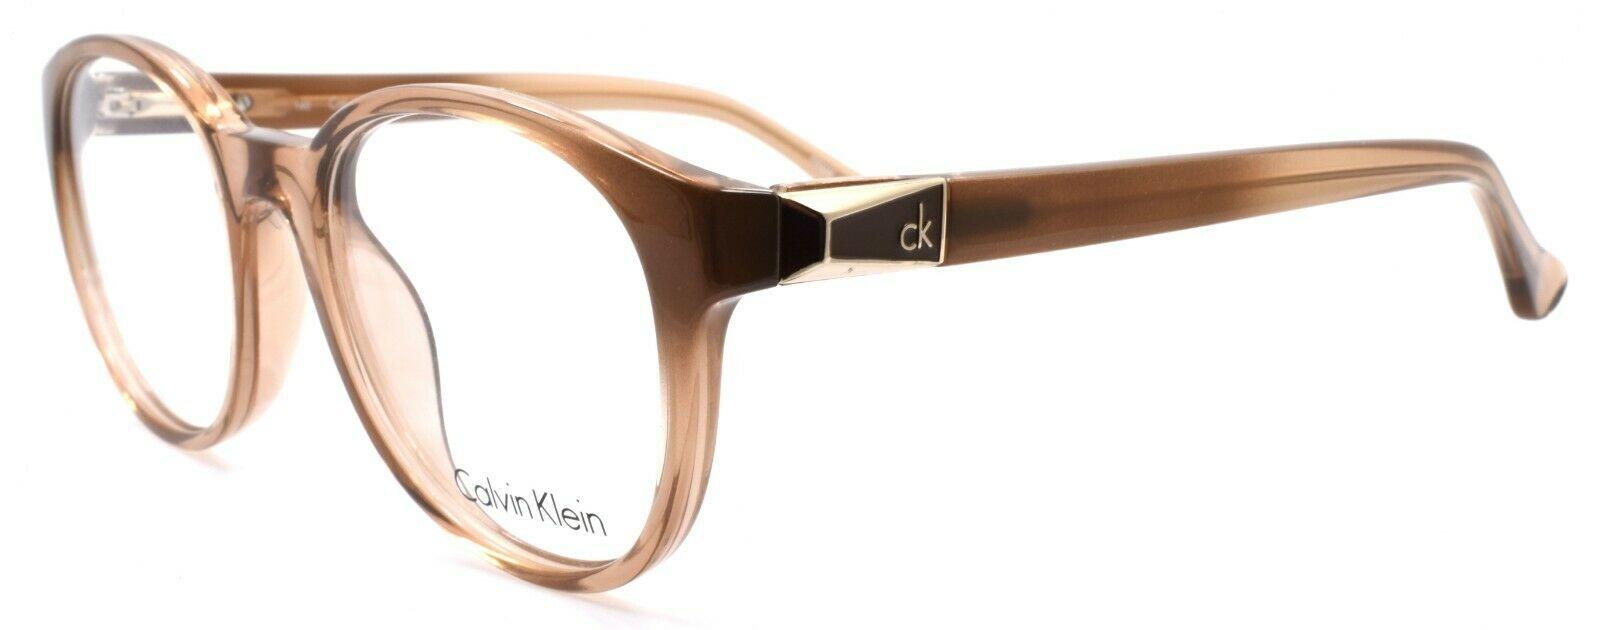 1-Calvin Klein CK5892 201 Women's Eyeglasses Frames 50-19-140 Brown-750779085158-IKSpecs